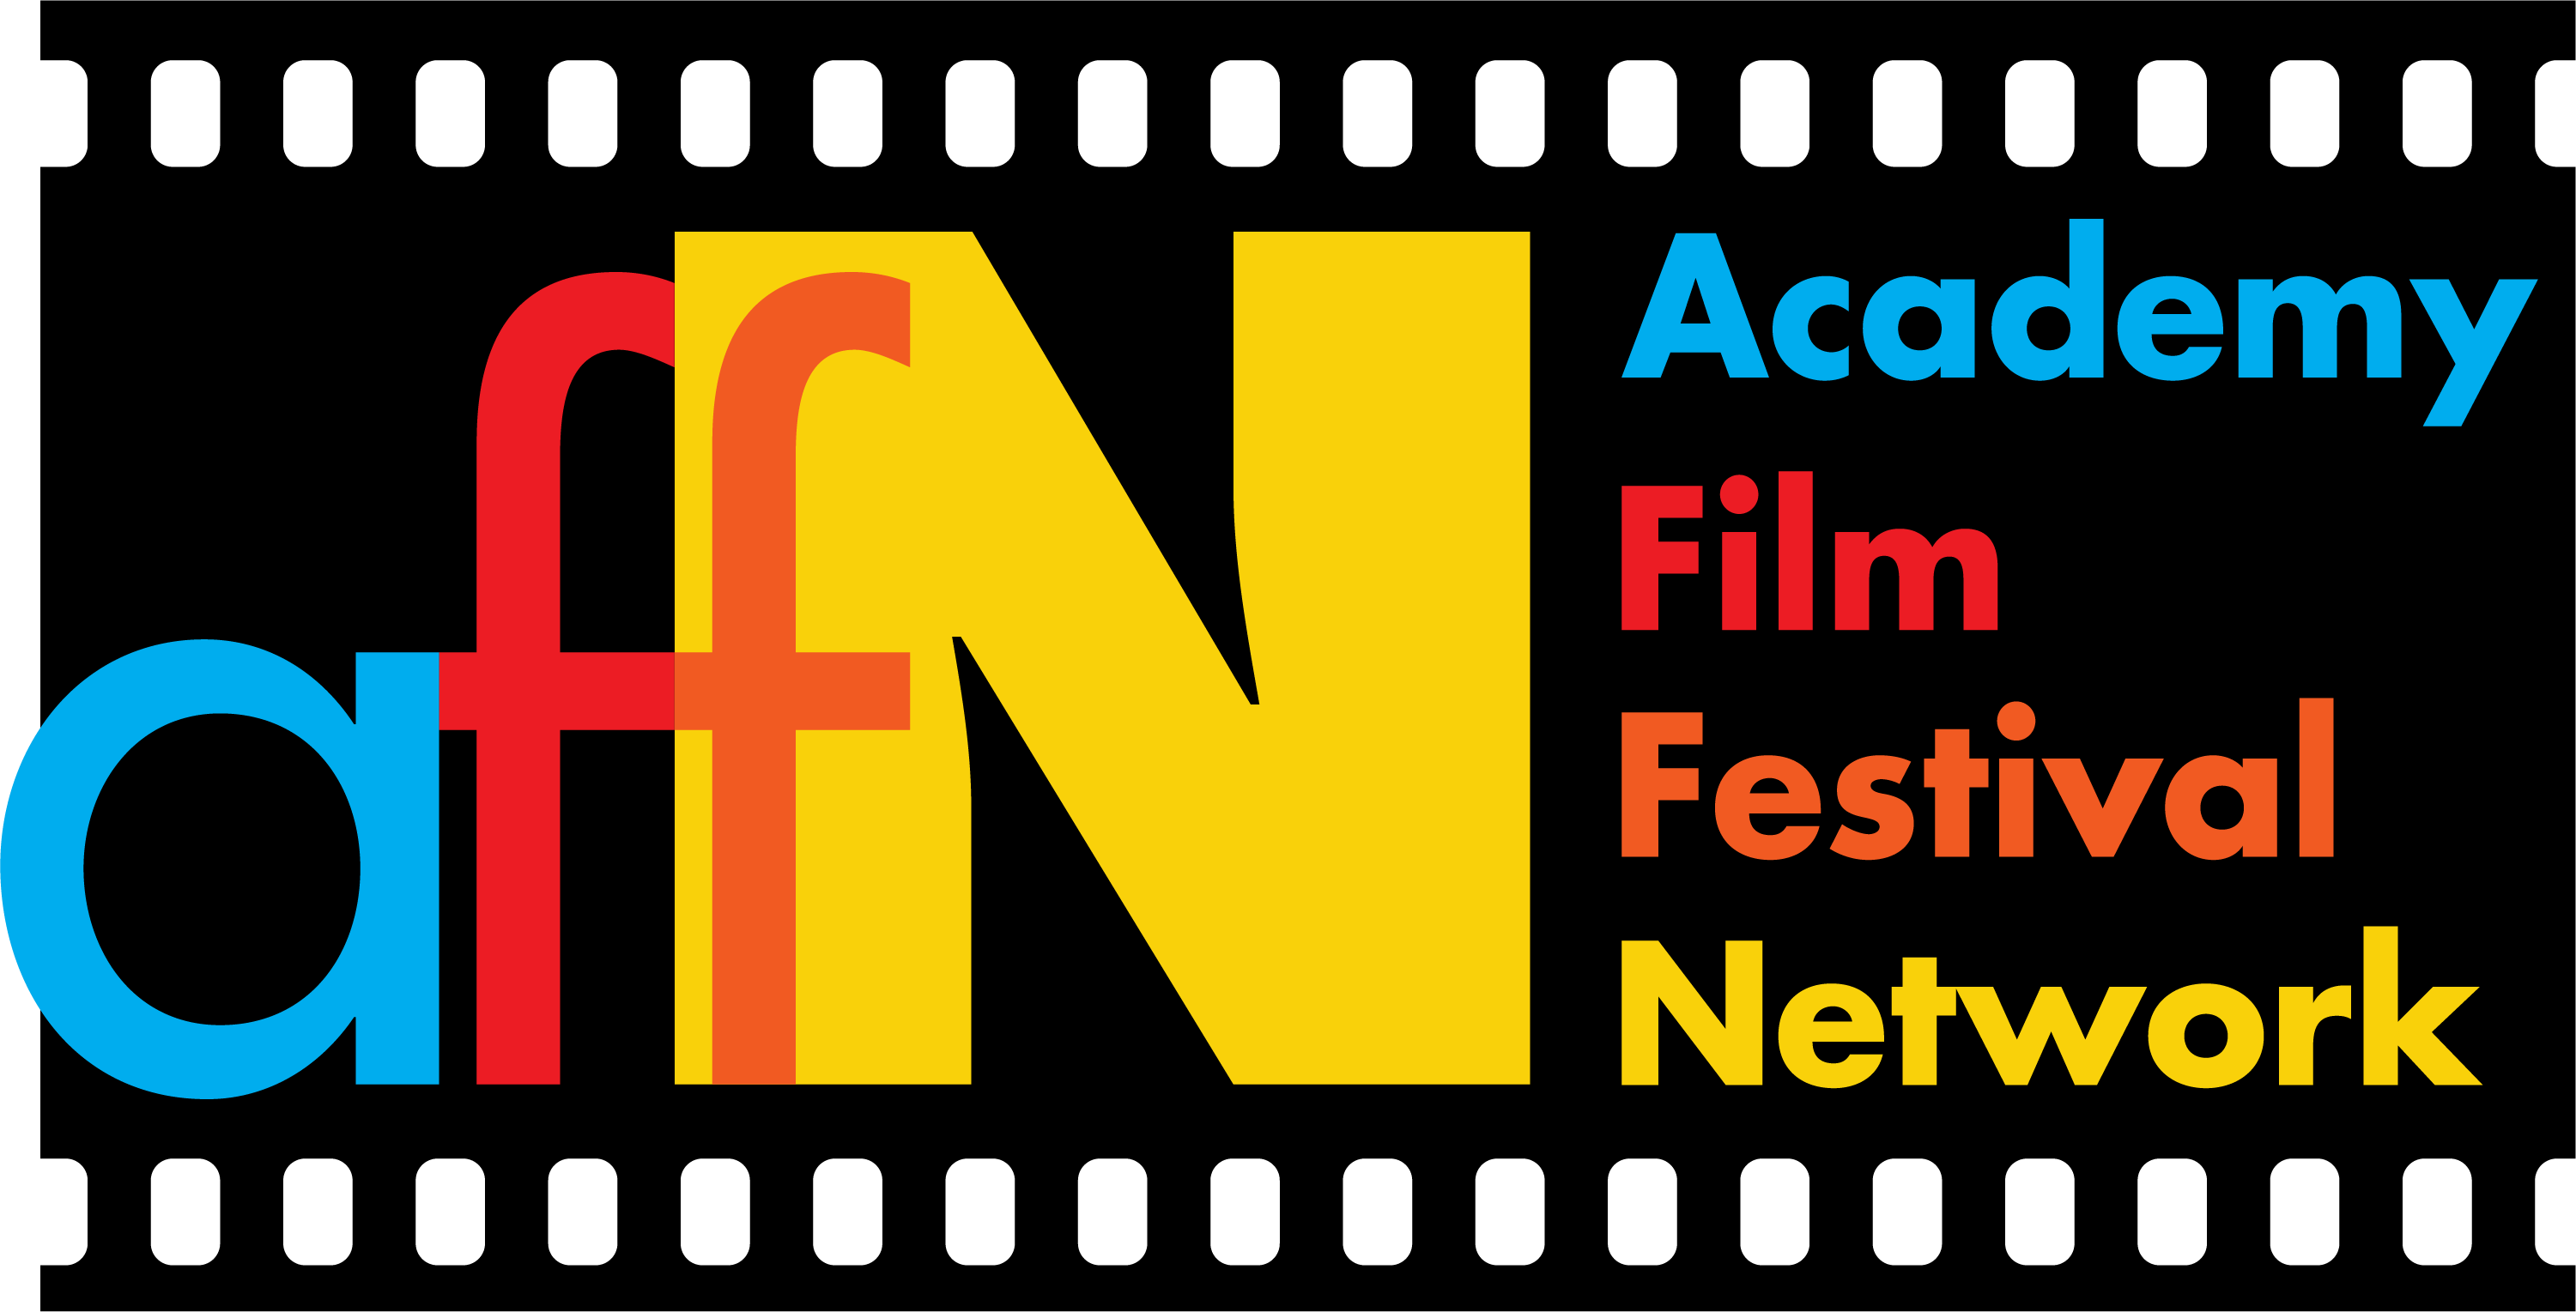 Academy Film Festival Network